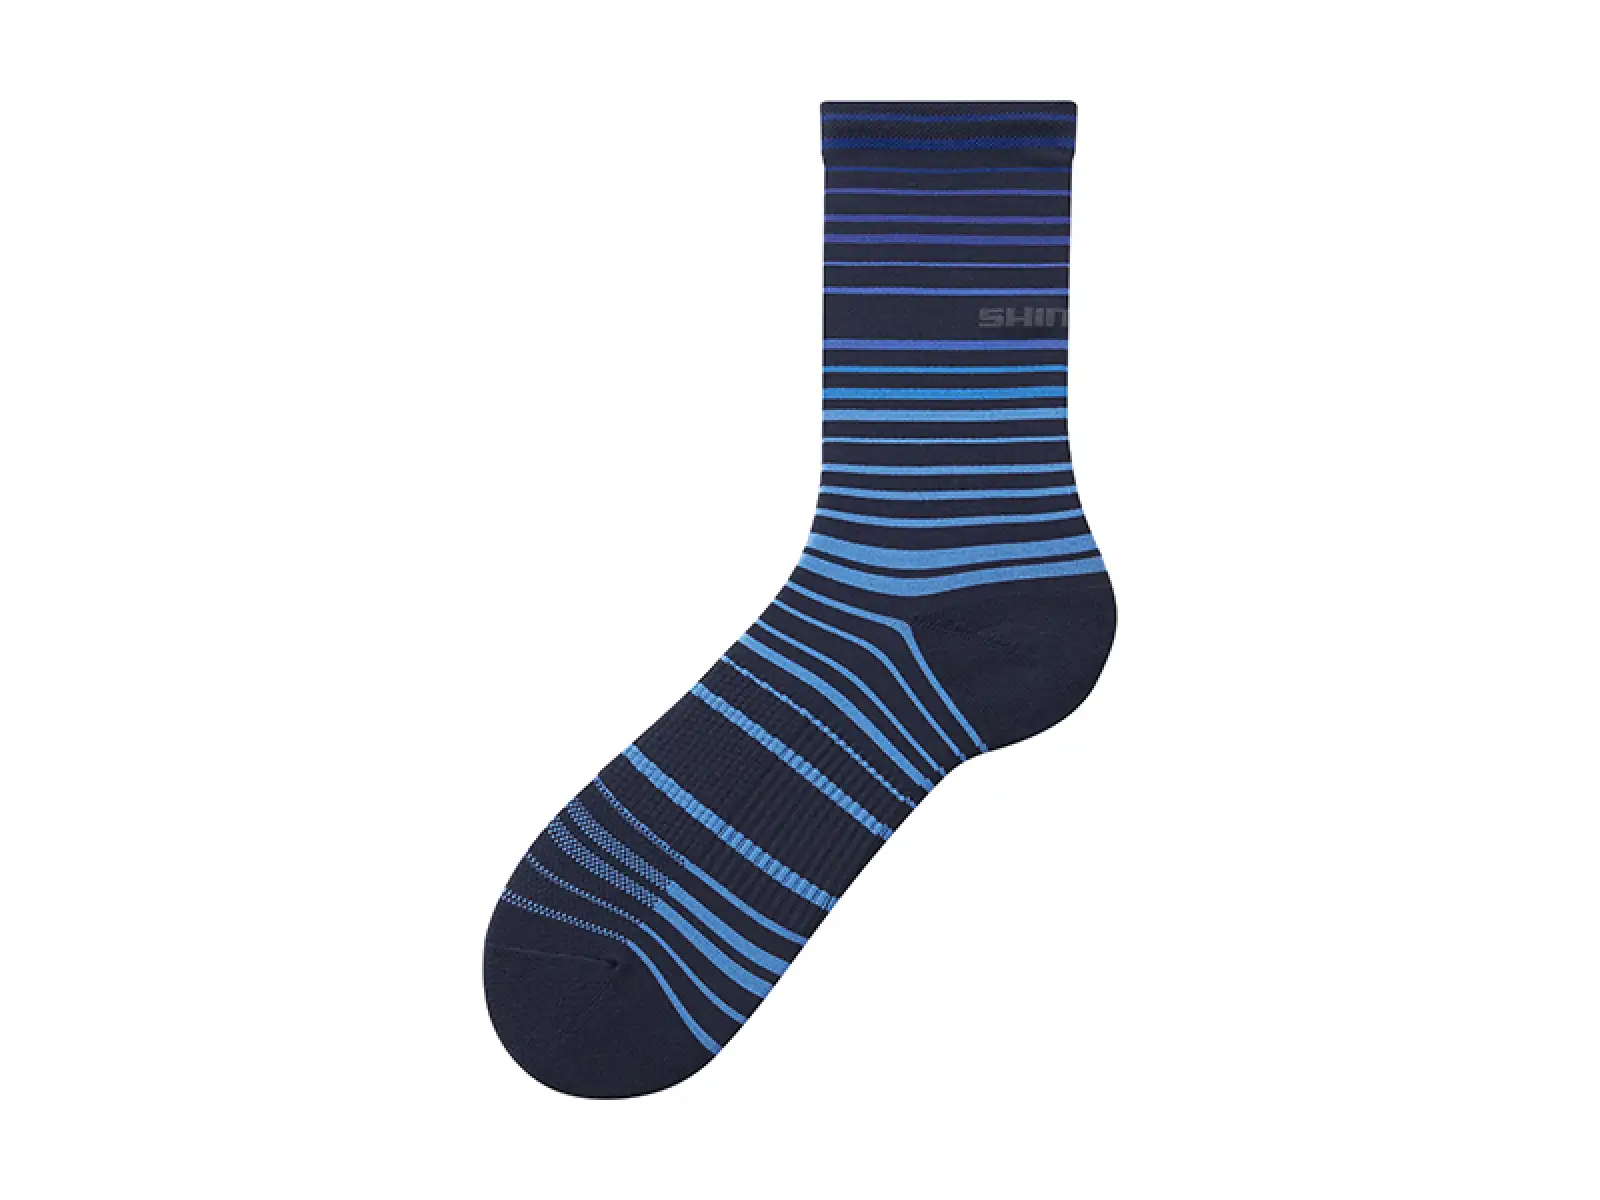 Shimano Original Tall ponožky námořní/modrá